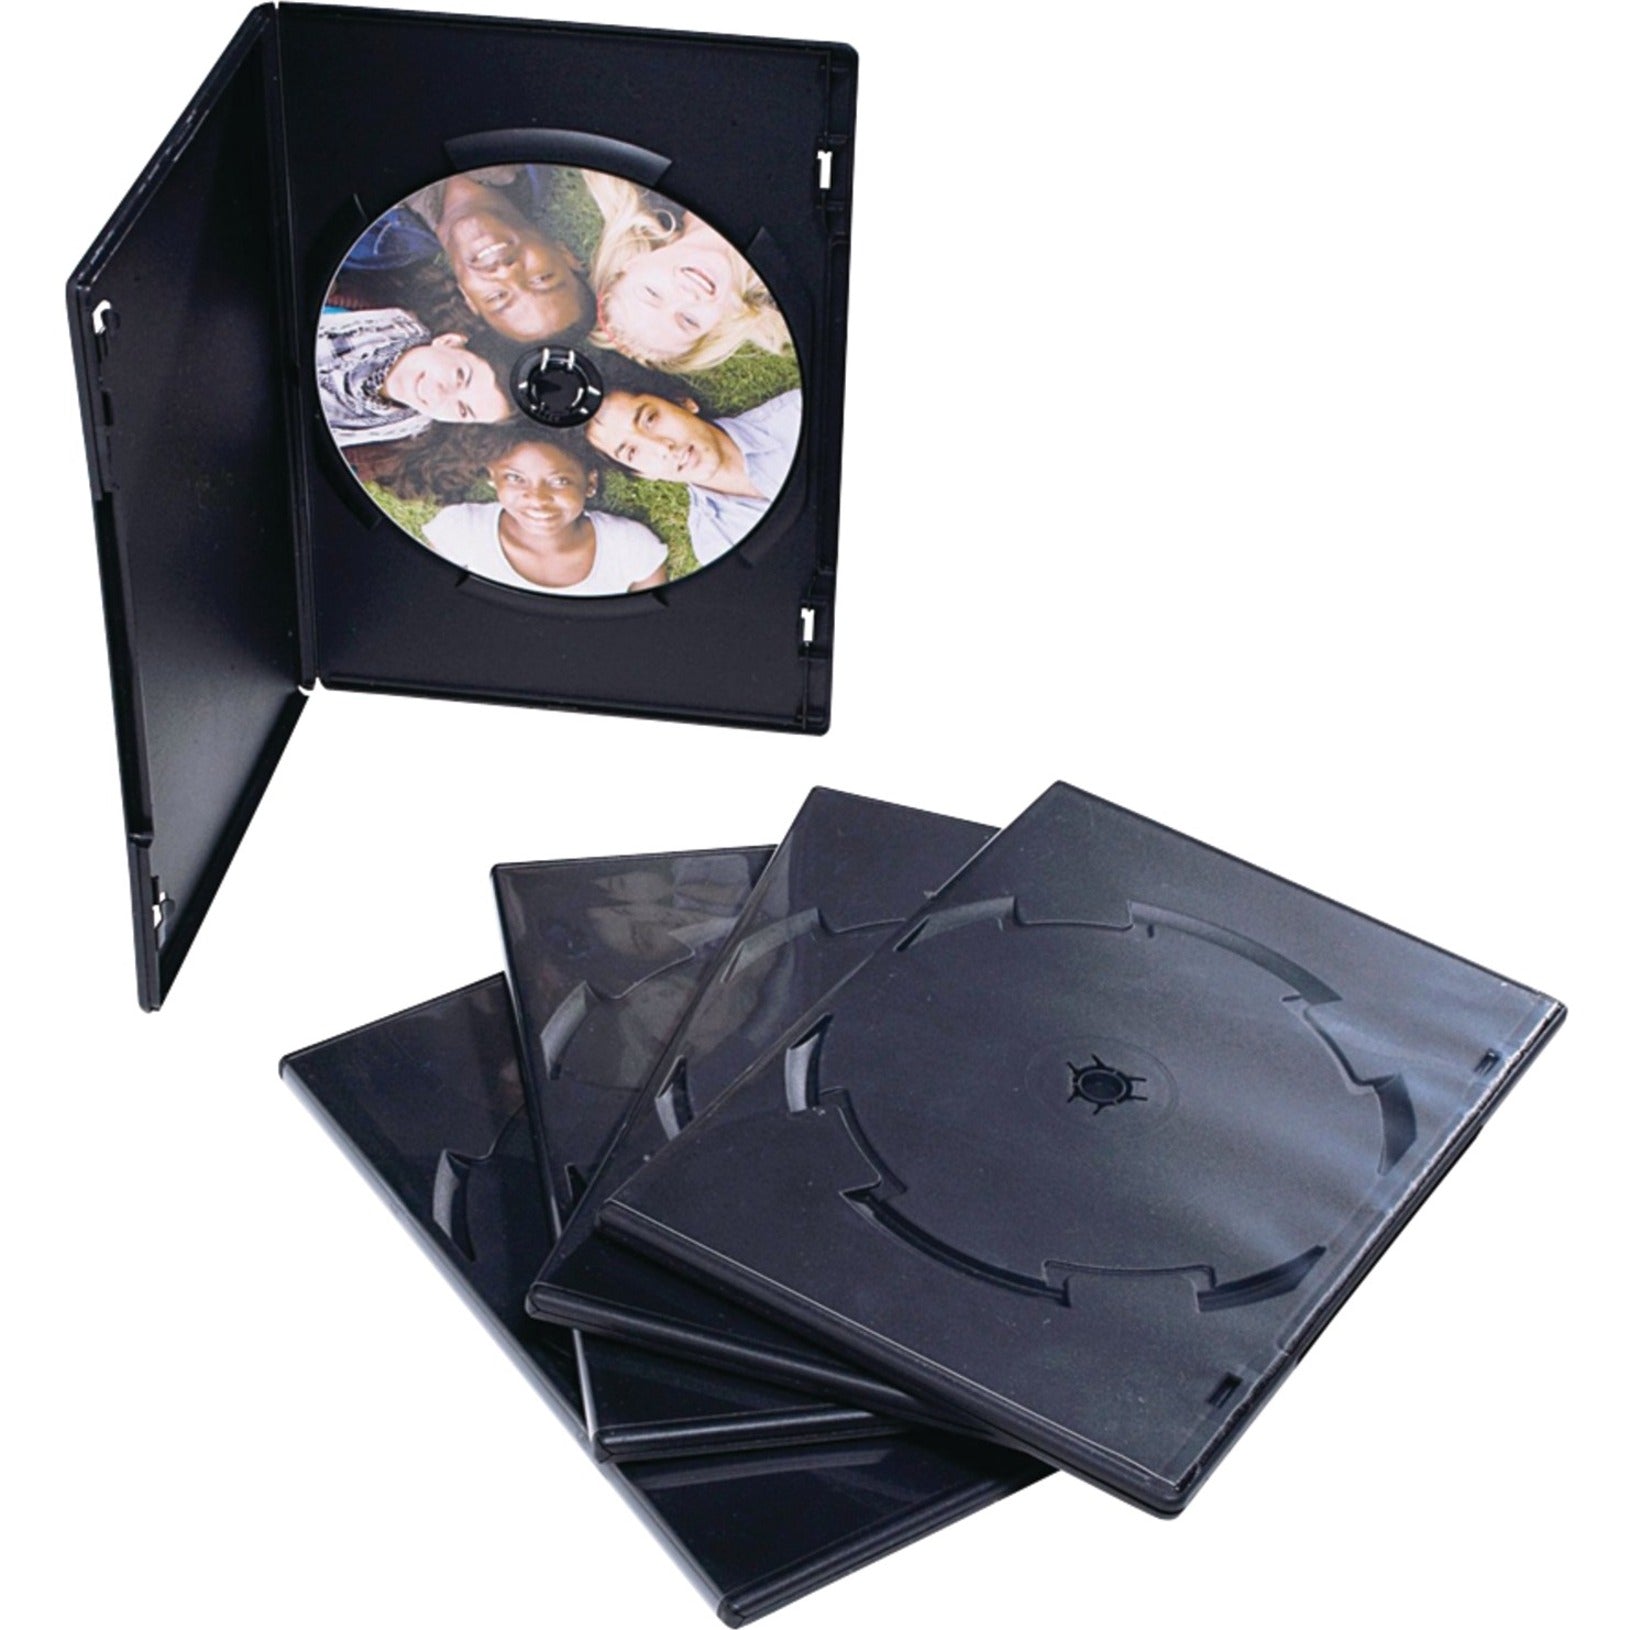 Verbatim 95094 DVD / Blu-Ray Video Trim Case, Superior Protection for Your Discs